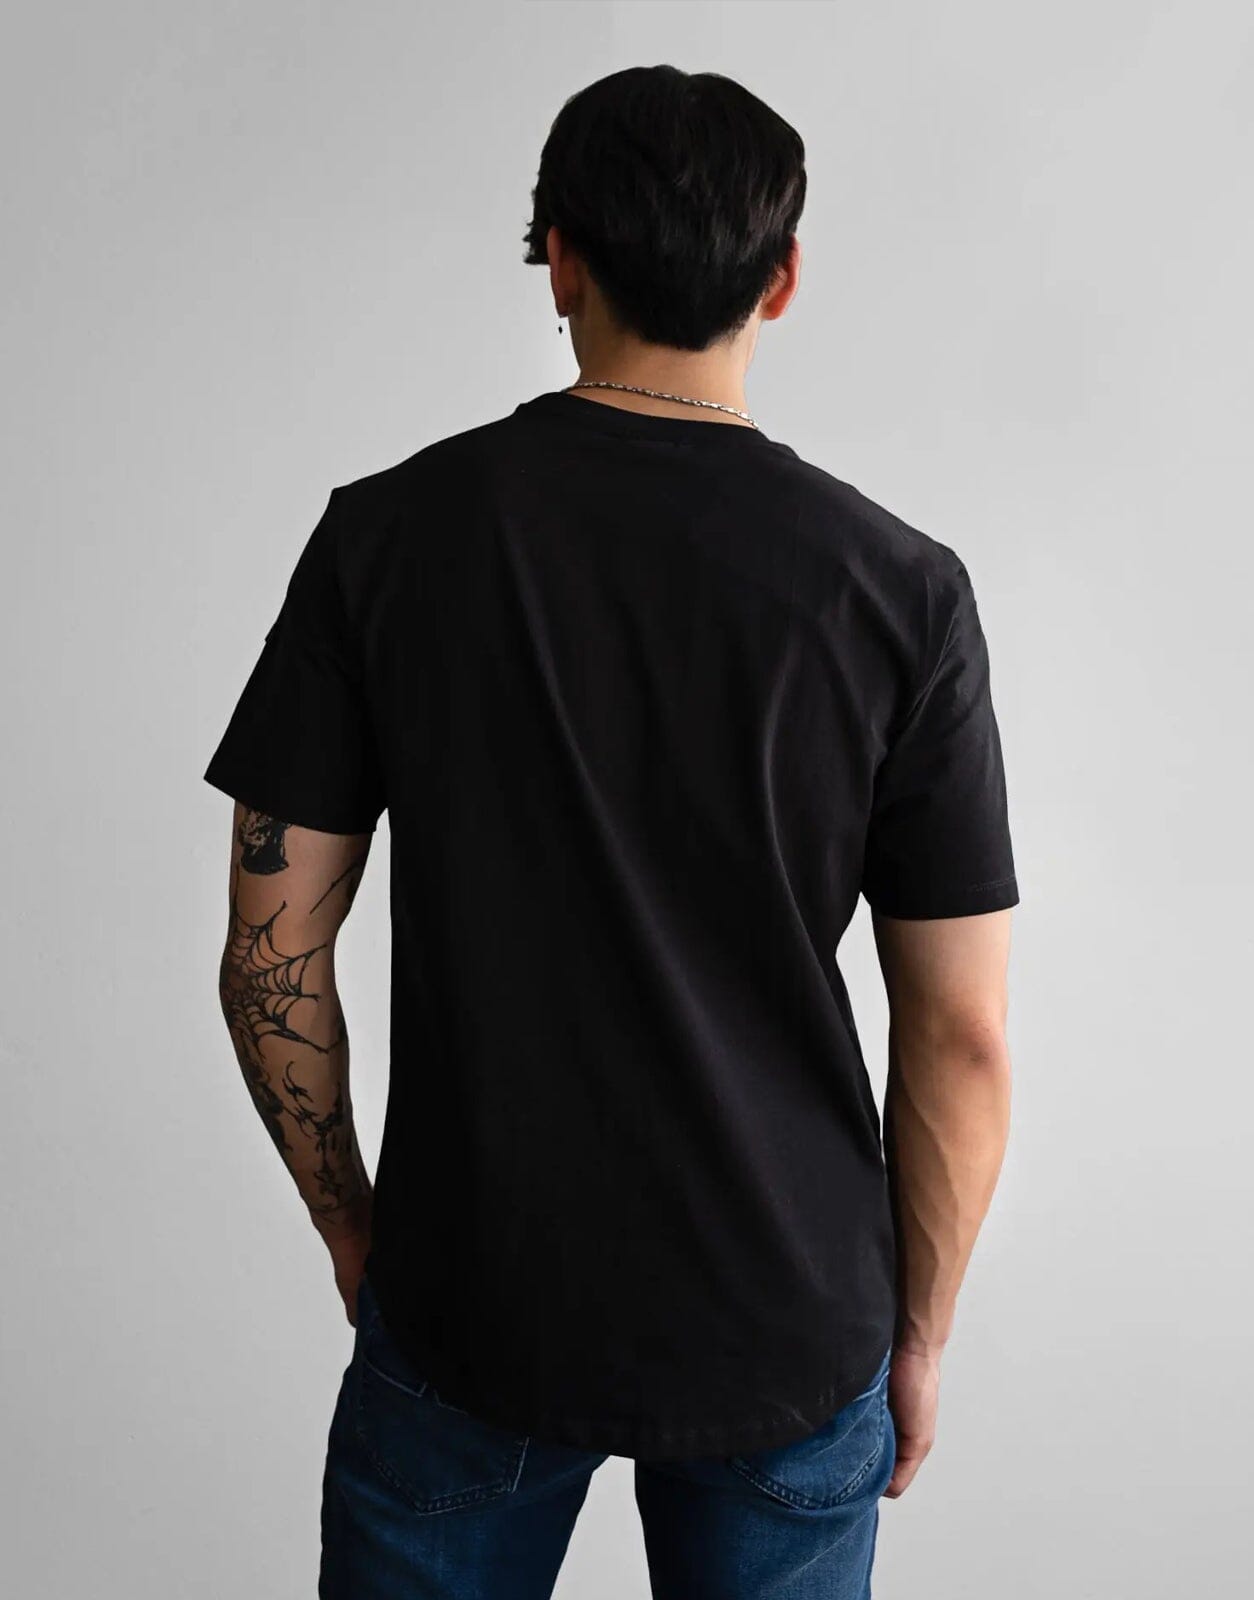 Fade Still Black T-Shirt - Subwear